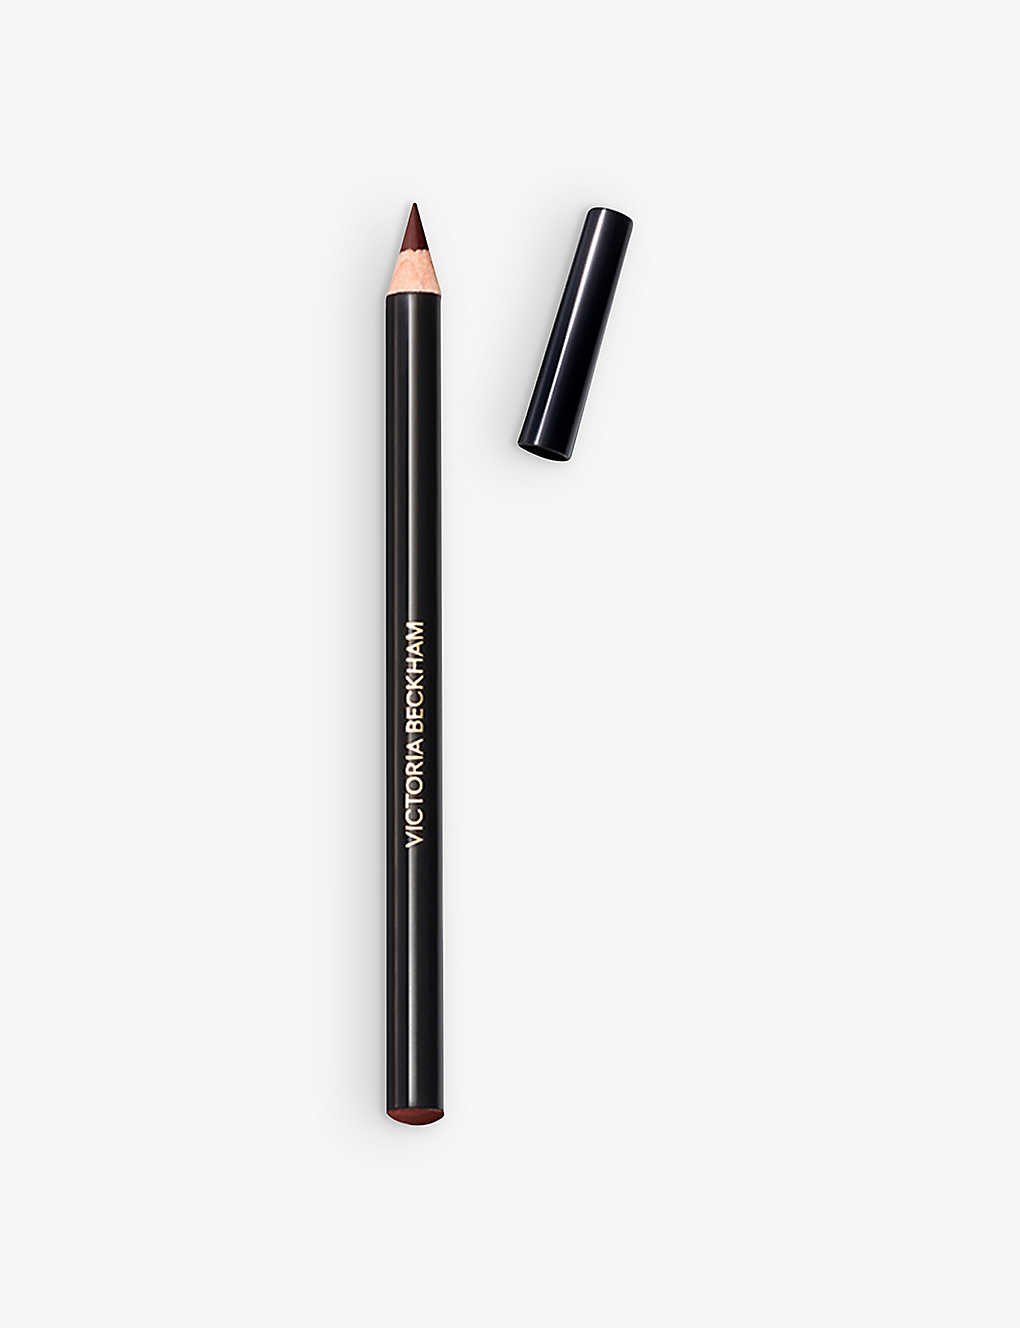 Victoria Beckham Beauty 6 Lip Definer Lip Pencil 1.1g In Multi-coloured